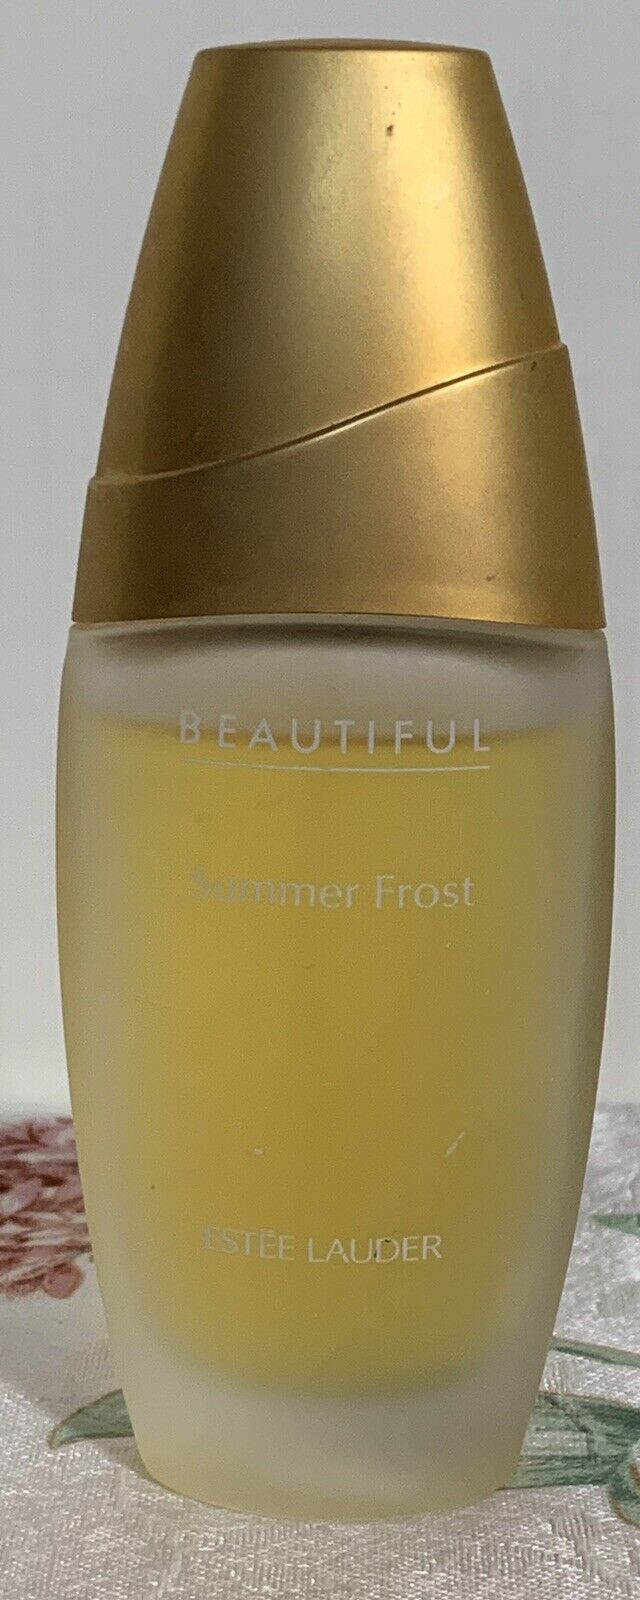 Estee Lauder Beautiful Summer Frost 2.5 oz Refreshing Fragrance Spray 